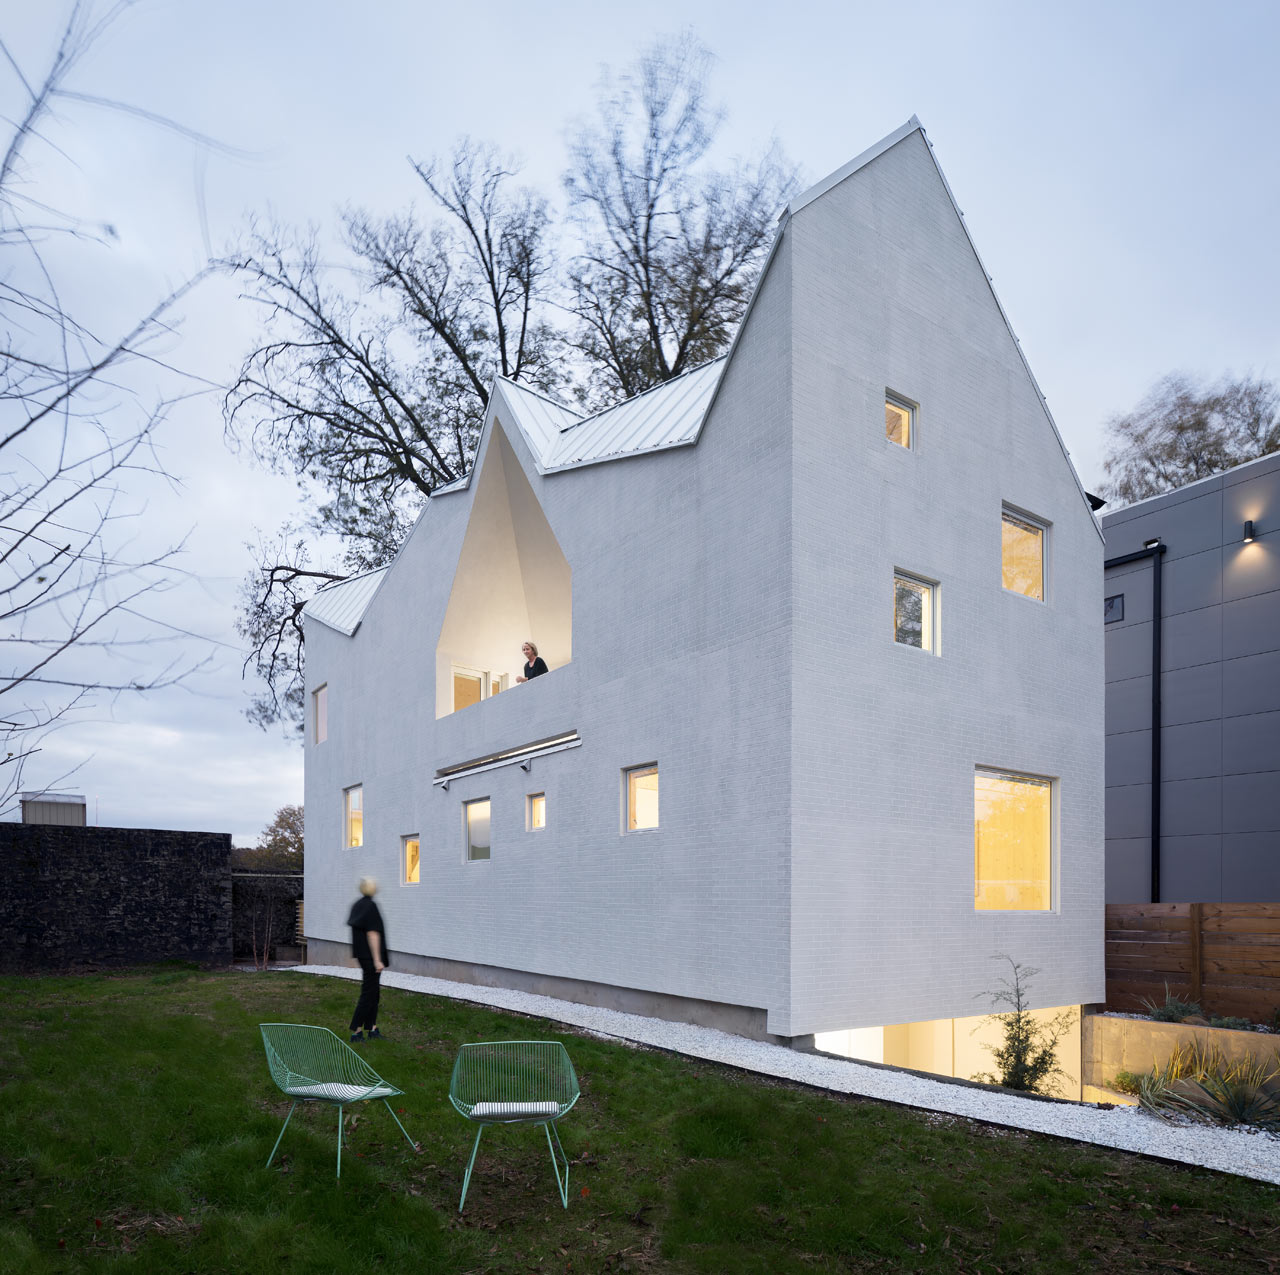 asymmetrical house